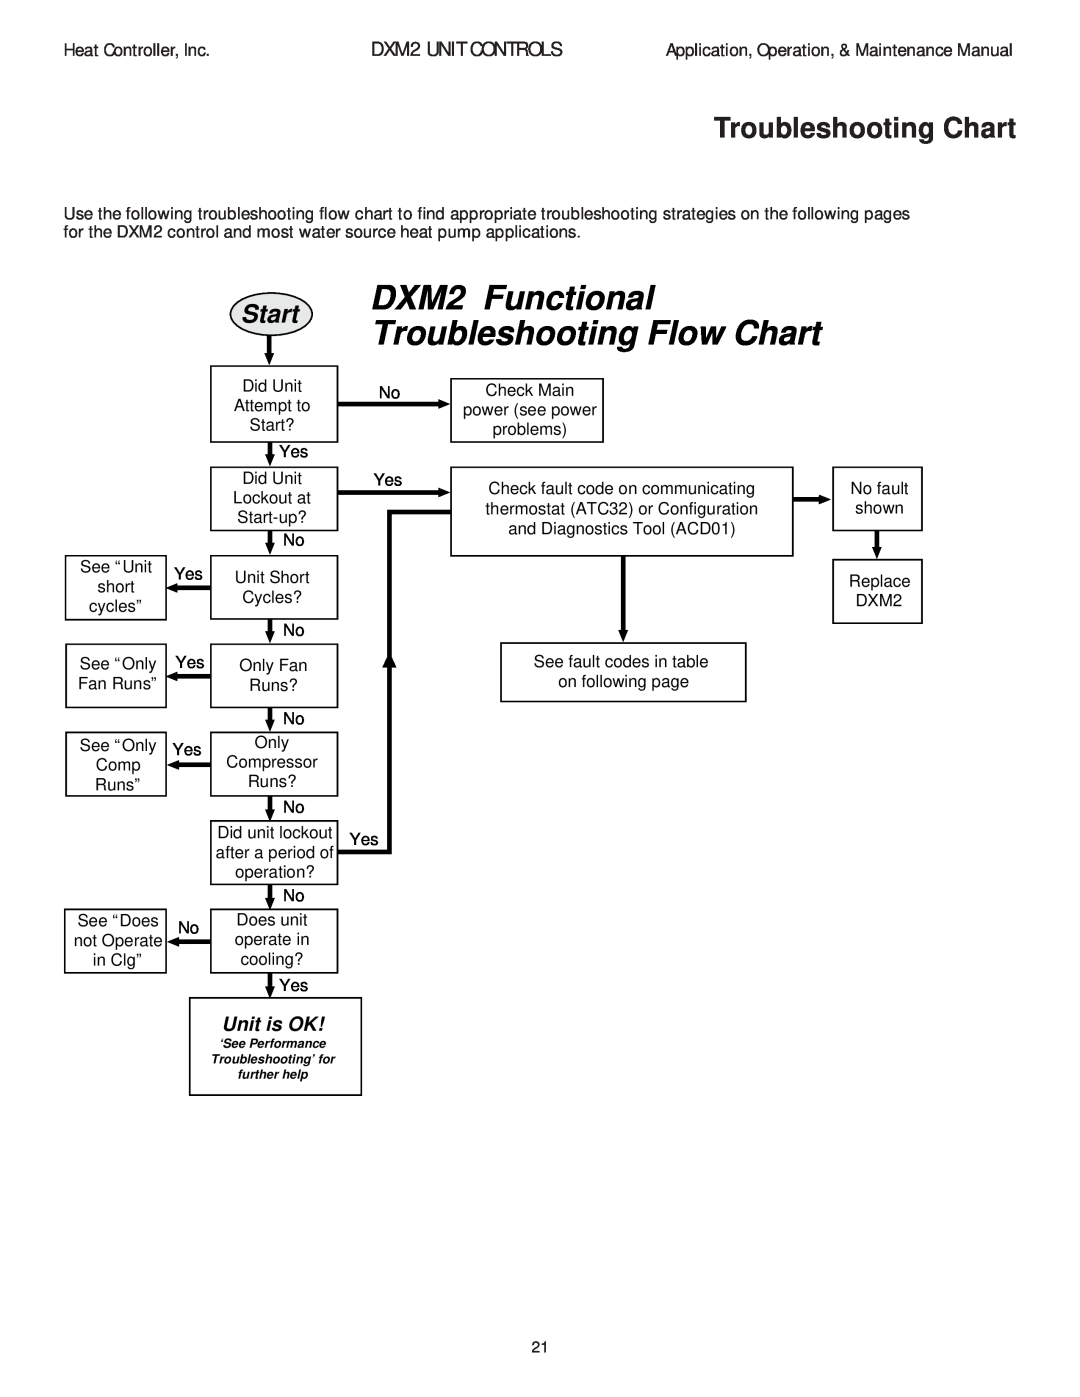 Heat Controller manual Troubleshooting Chart, DXM2 Functional Troubleshooting Flow Chart, Start, DXM2 UNIT CONTROLS 